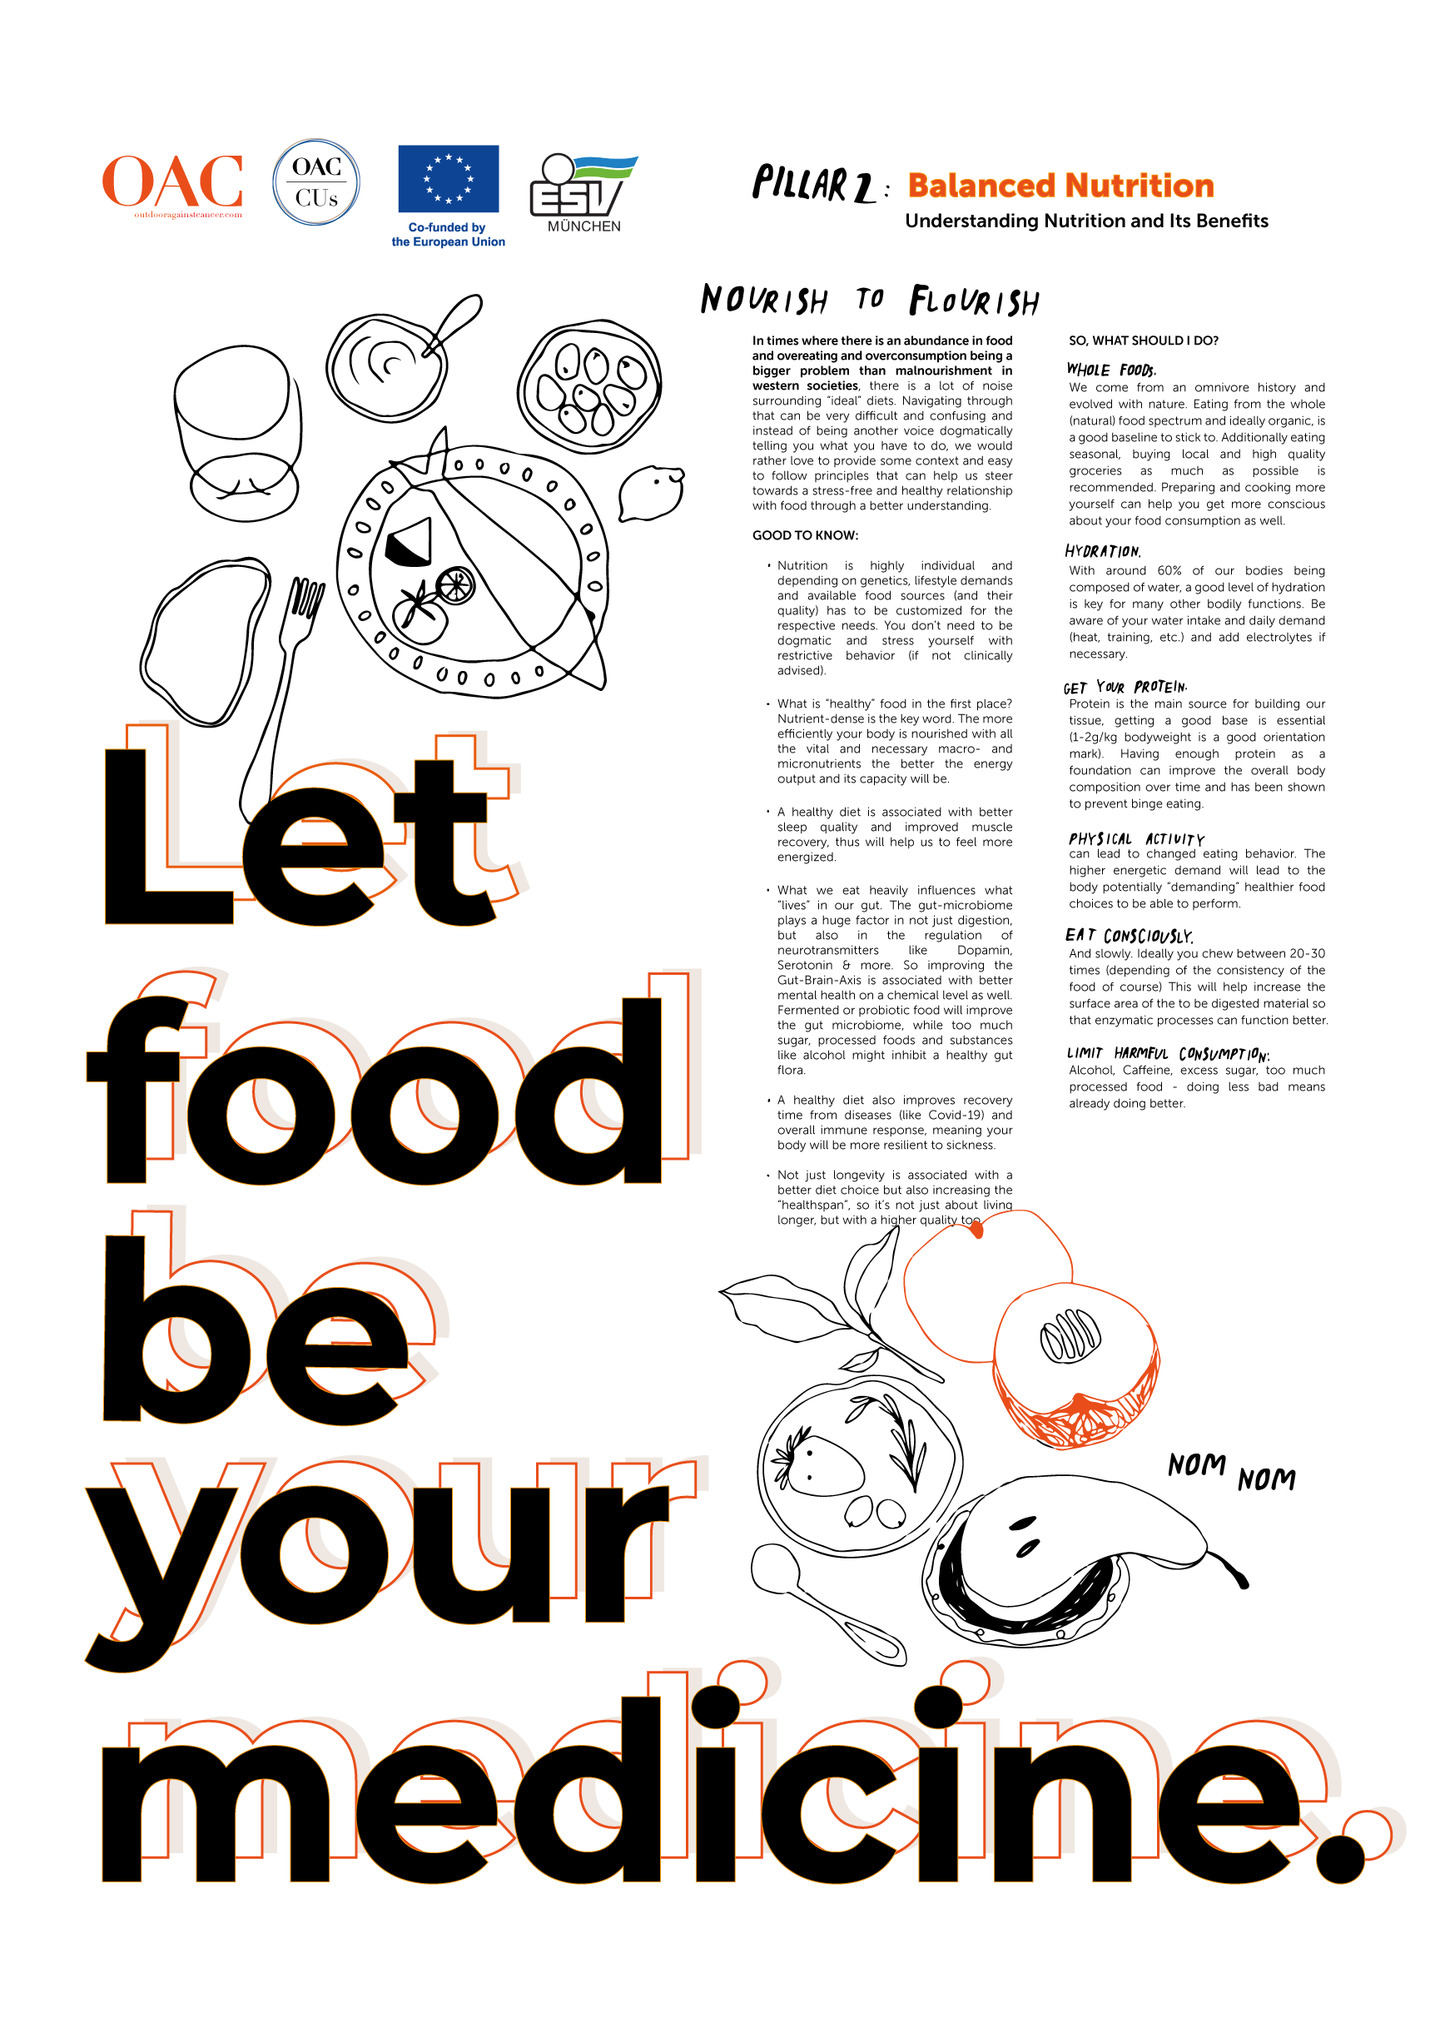 OACCUS Fact Sheet Posters: Pillar II Balanced Nutrition